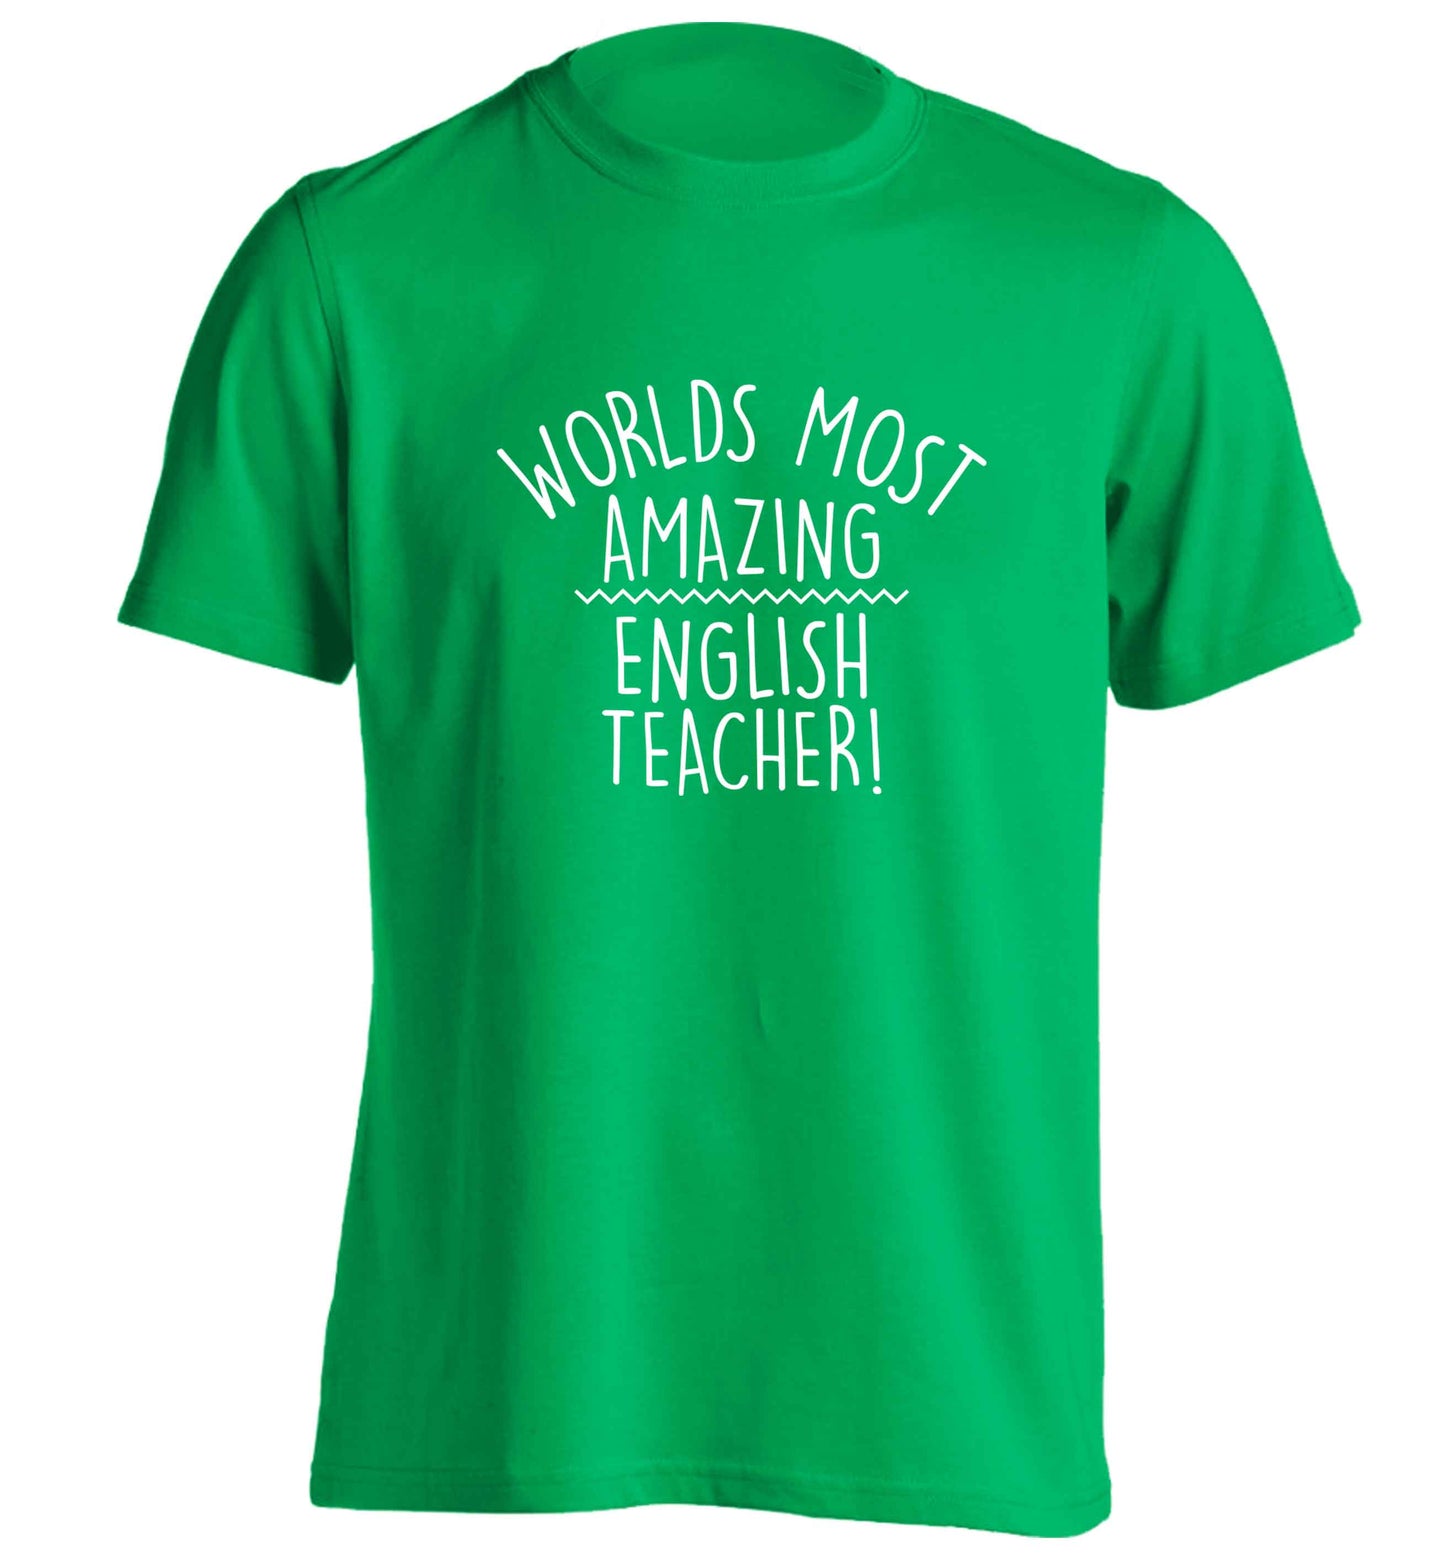 Worlds most amazing English teacher adults unisex green Tshirt 2XL